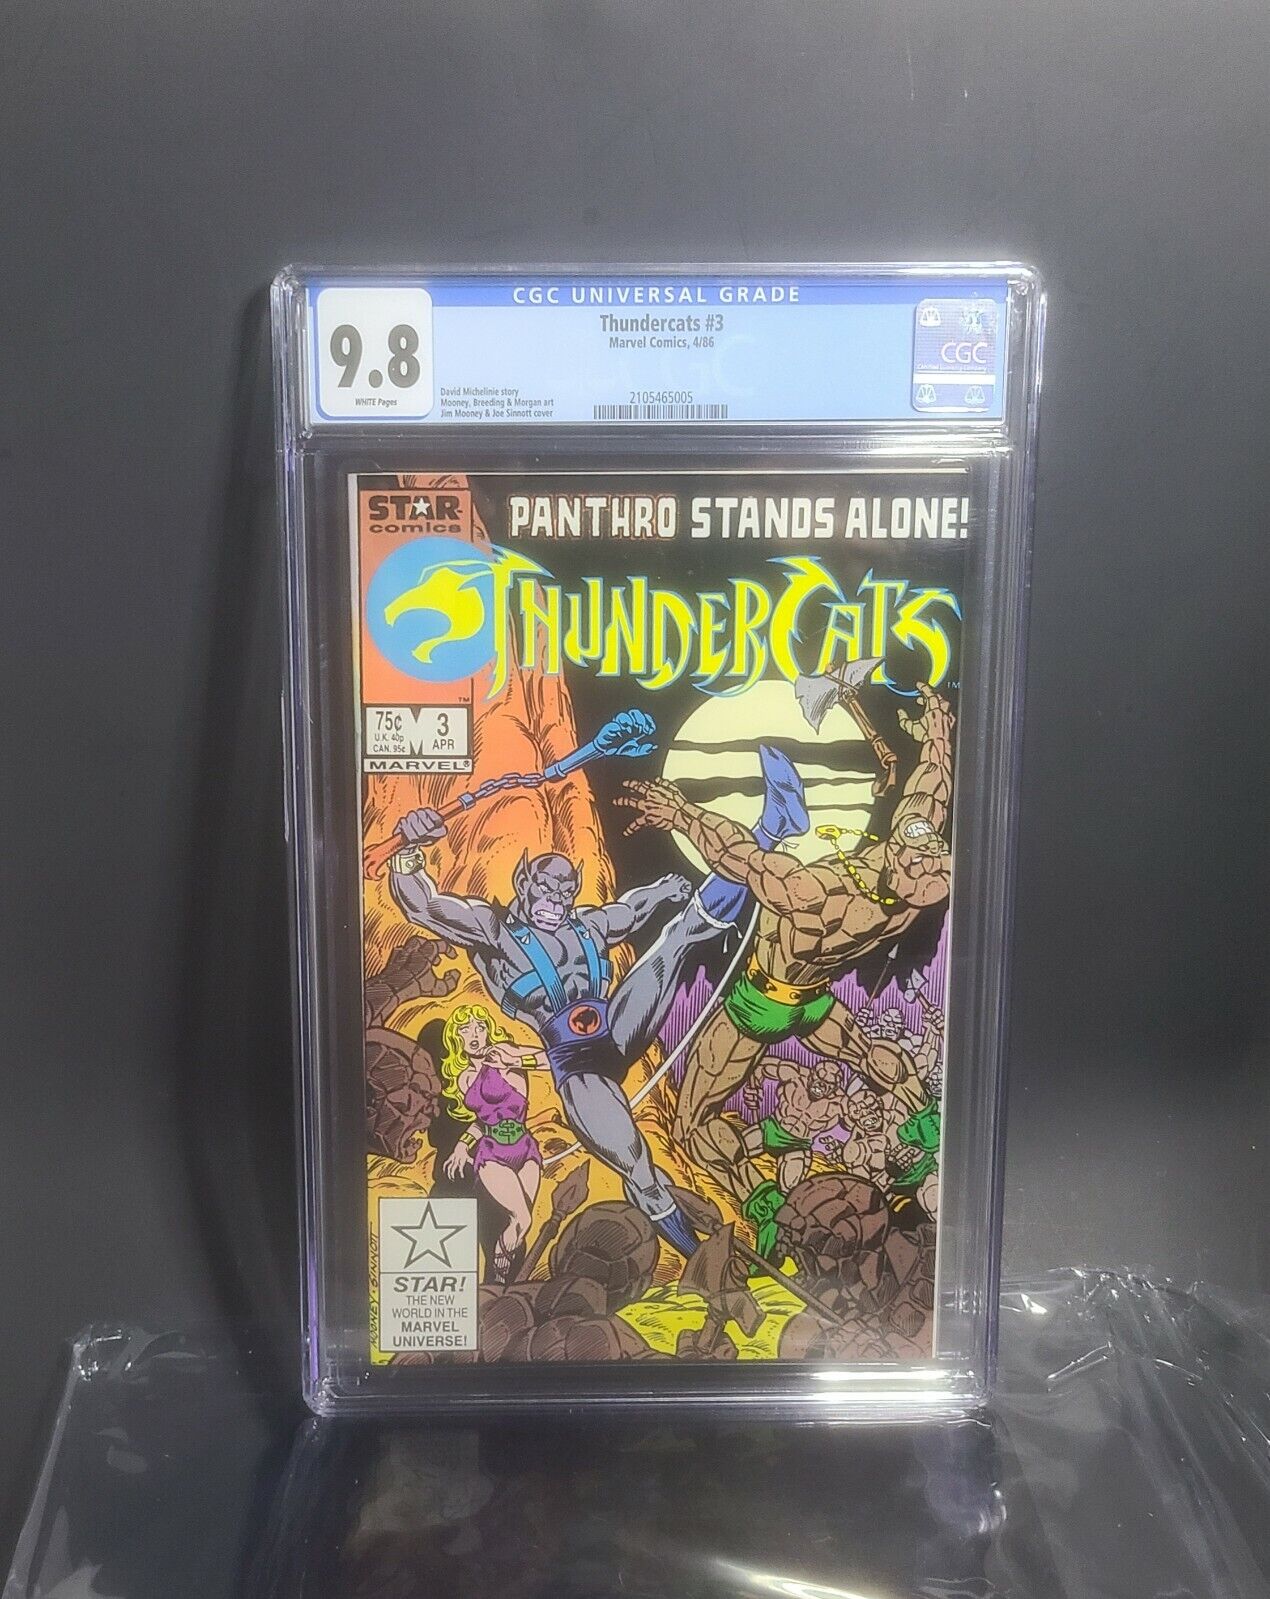 THUNDERCATS #3 9.8 CGC MCU MOVIE DISNEY 1986 1985 STAR Panthro Marvel Vintage 